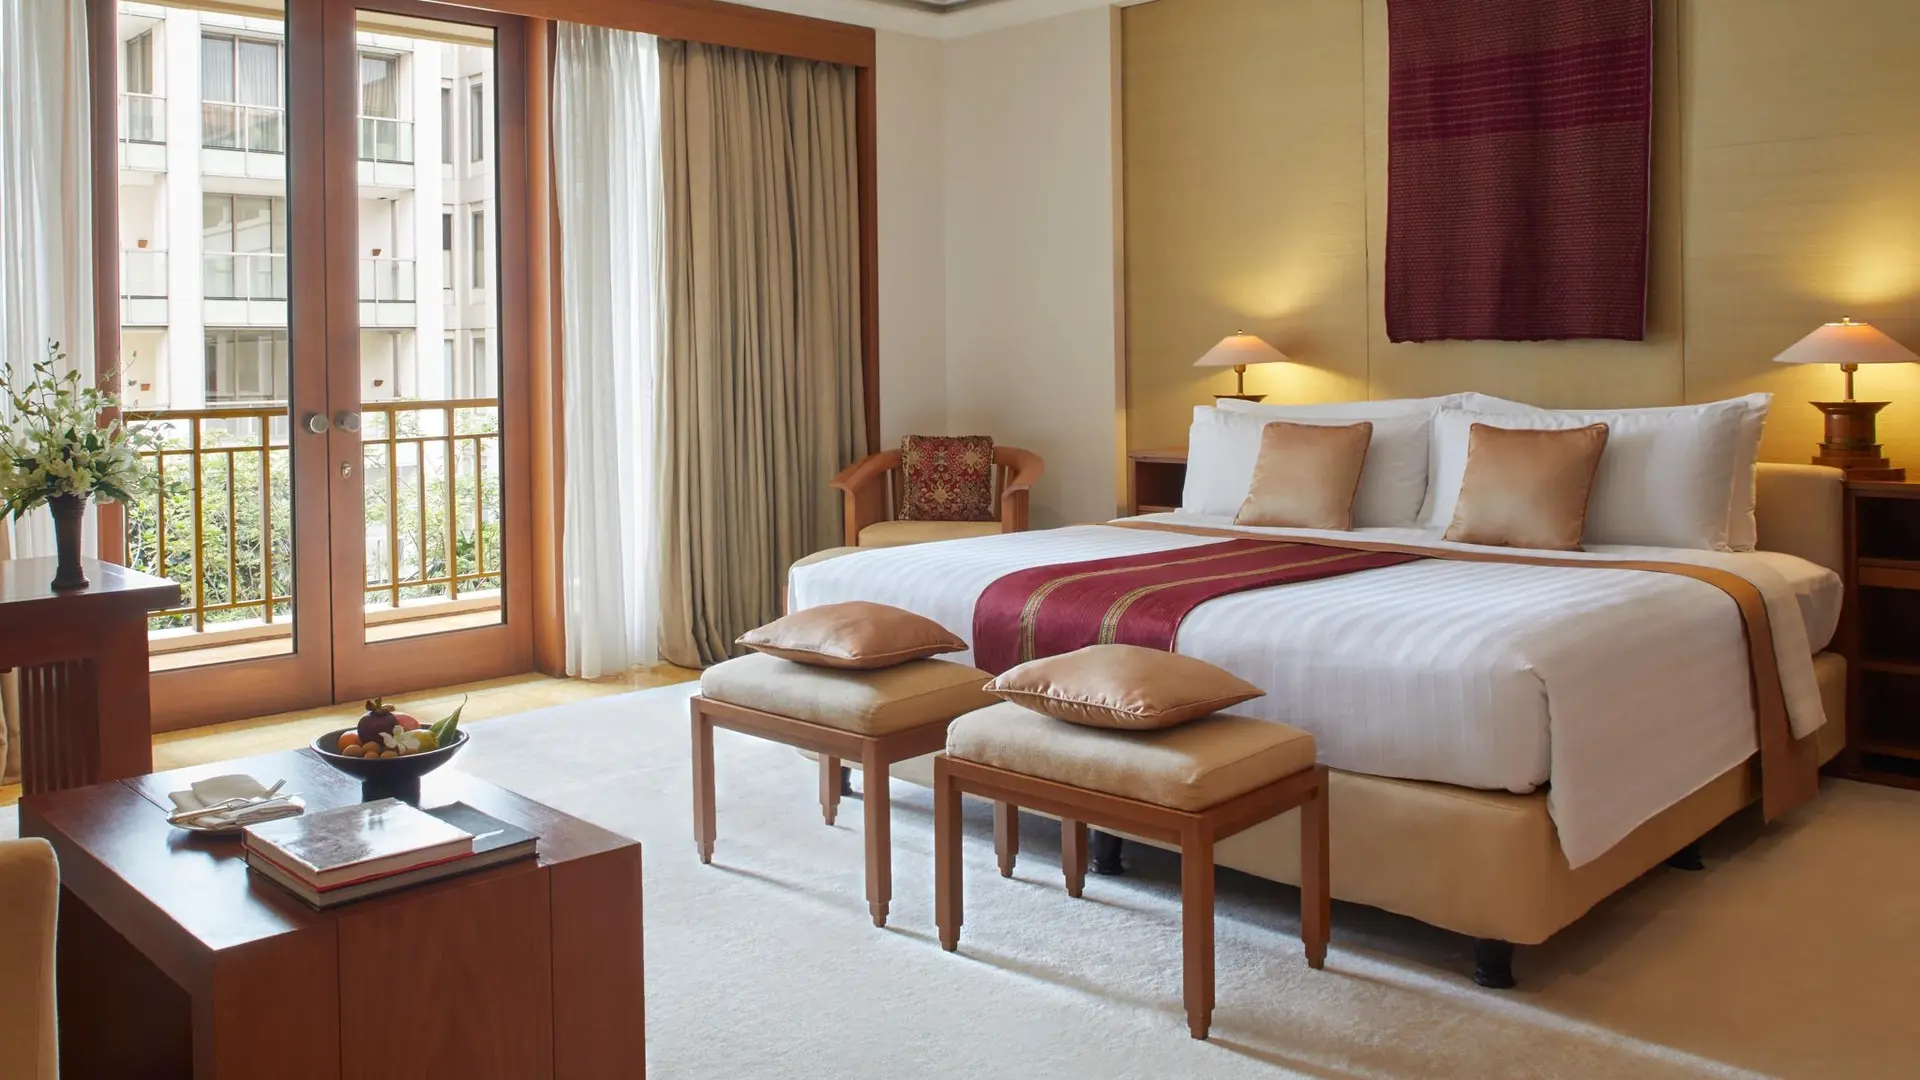 Hotel bedroom at the dharmawangsa jakarta hotel